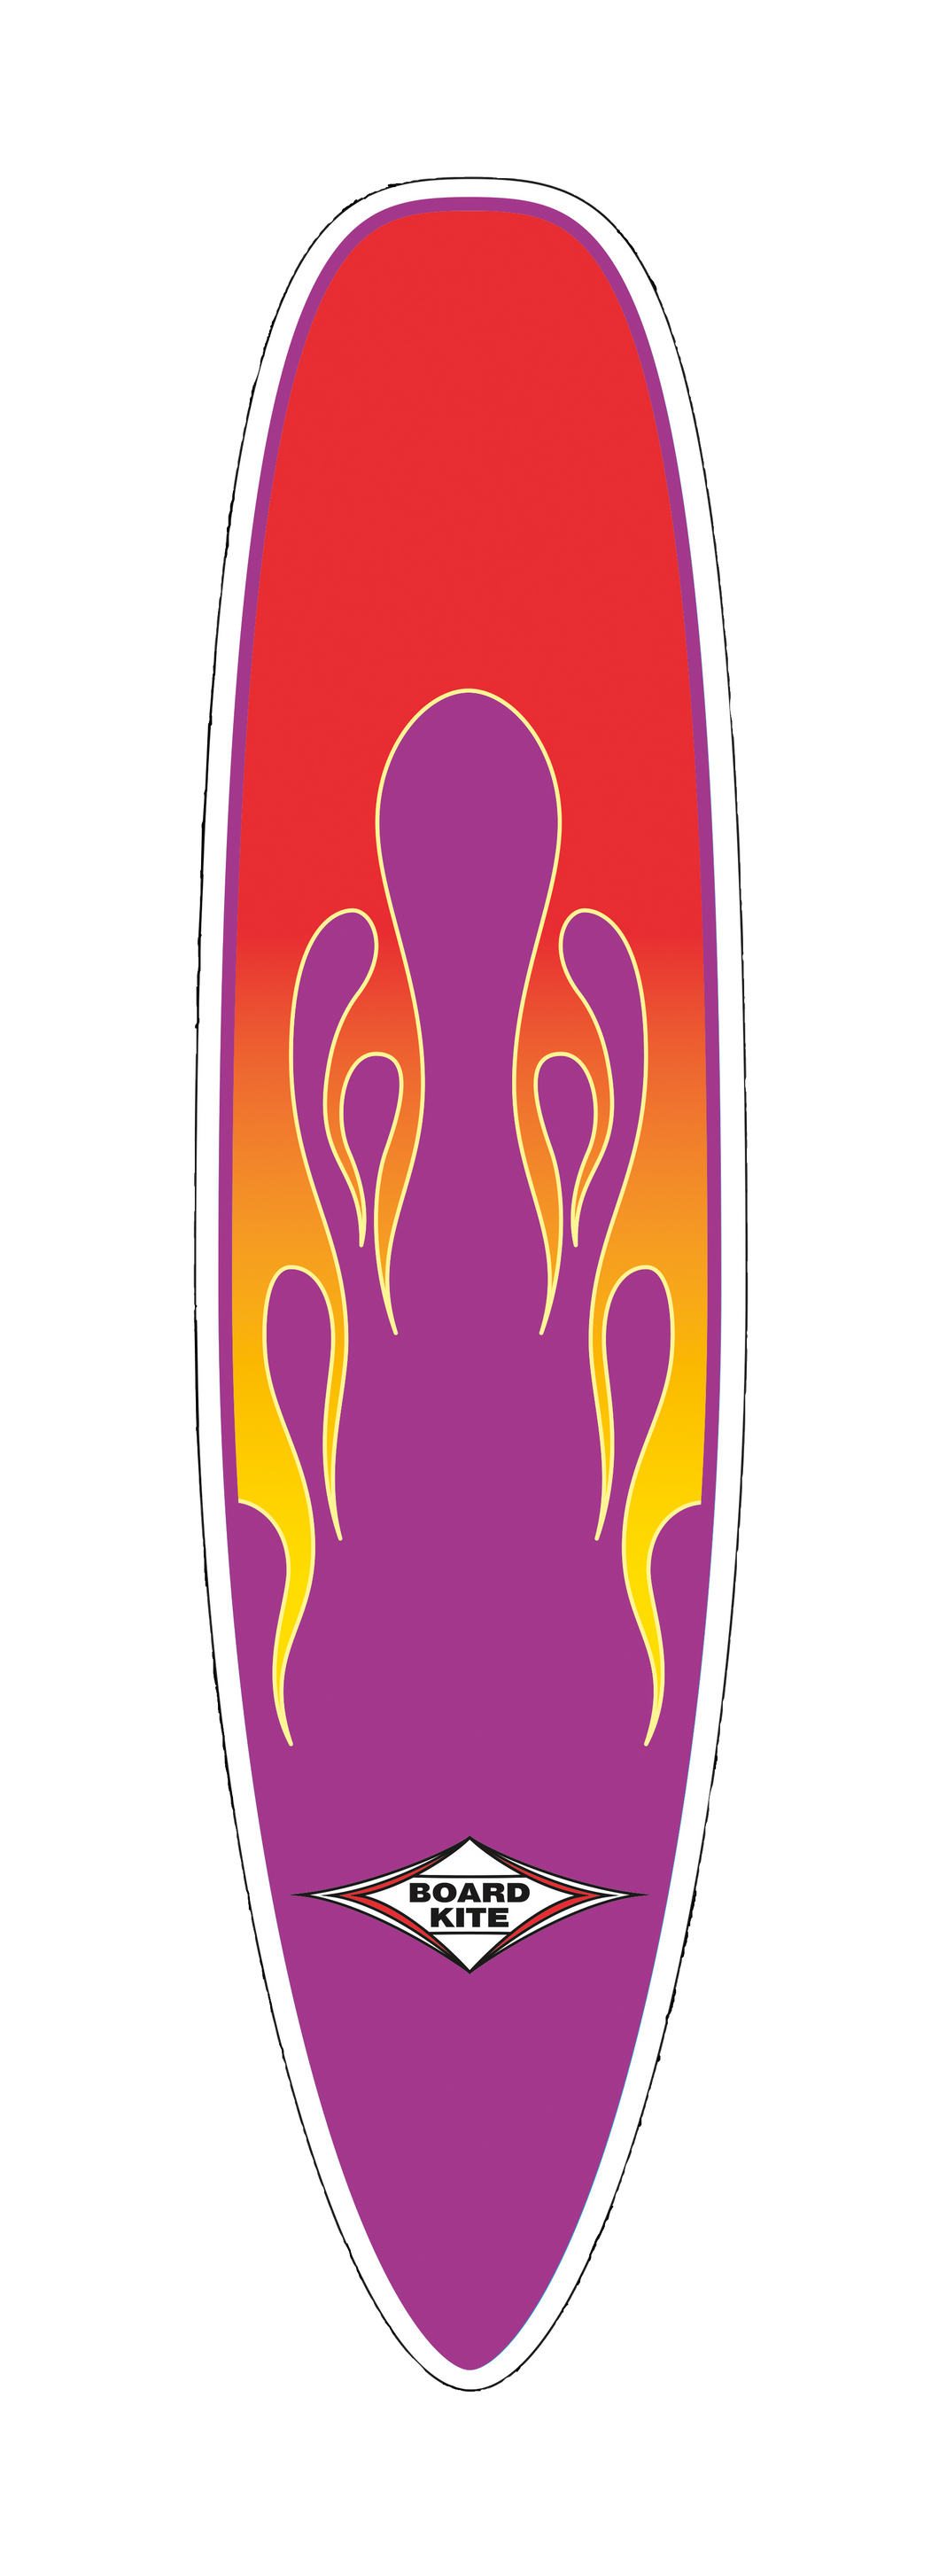 86 Inch (7 Foot) Tall Nylon Surfboard kite Purple